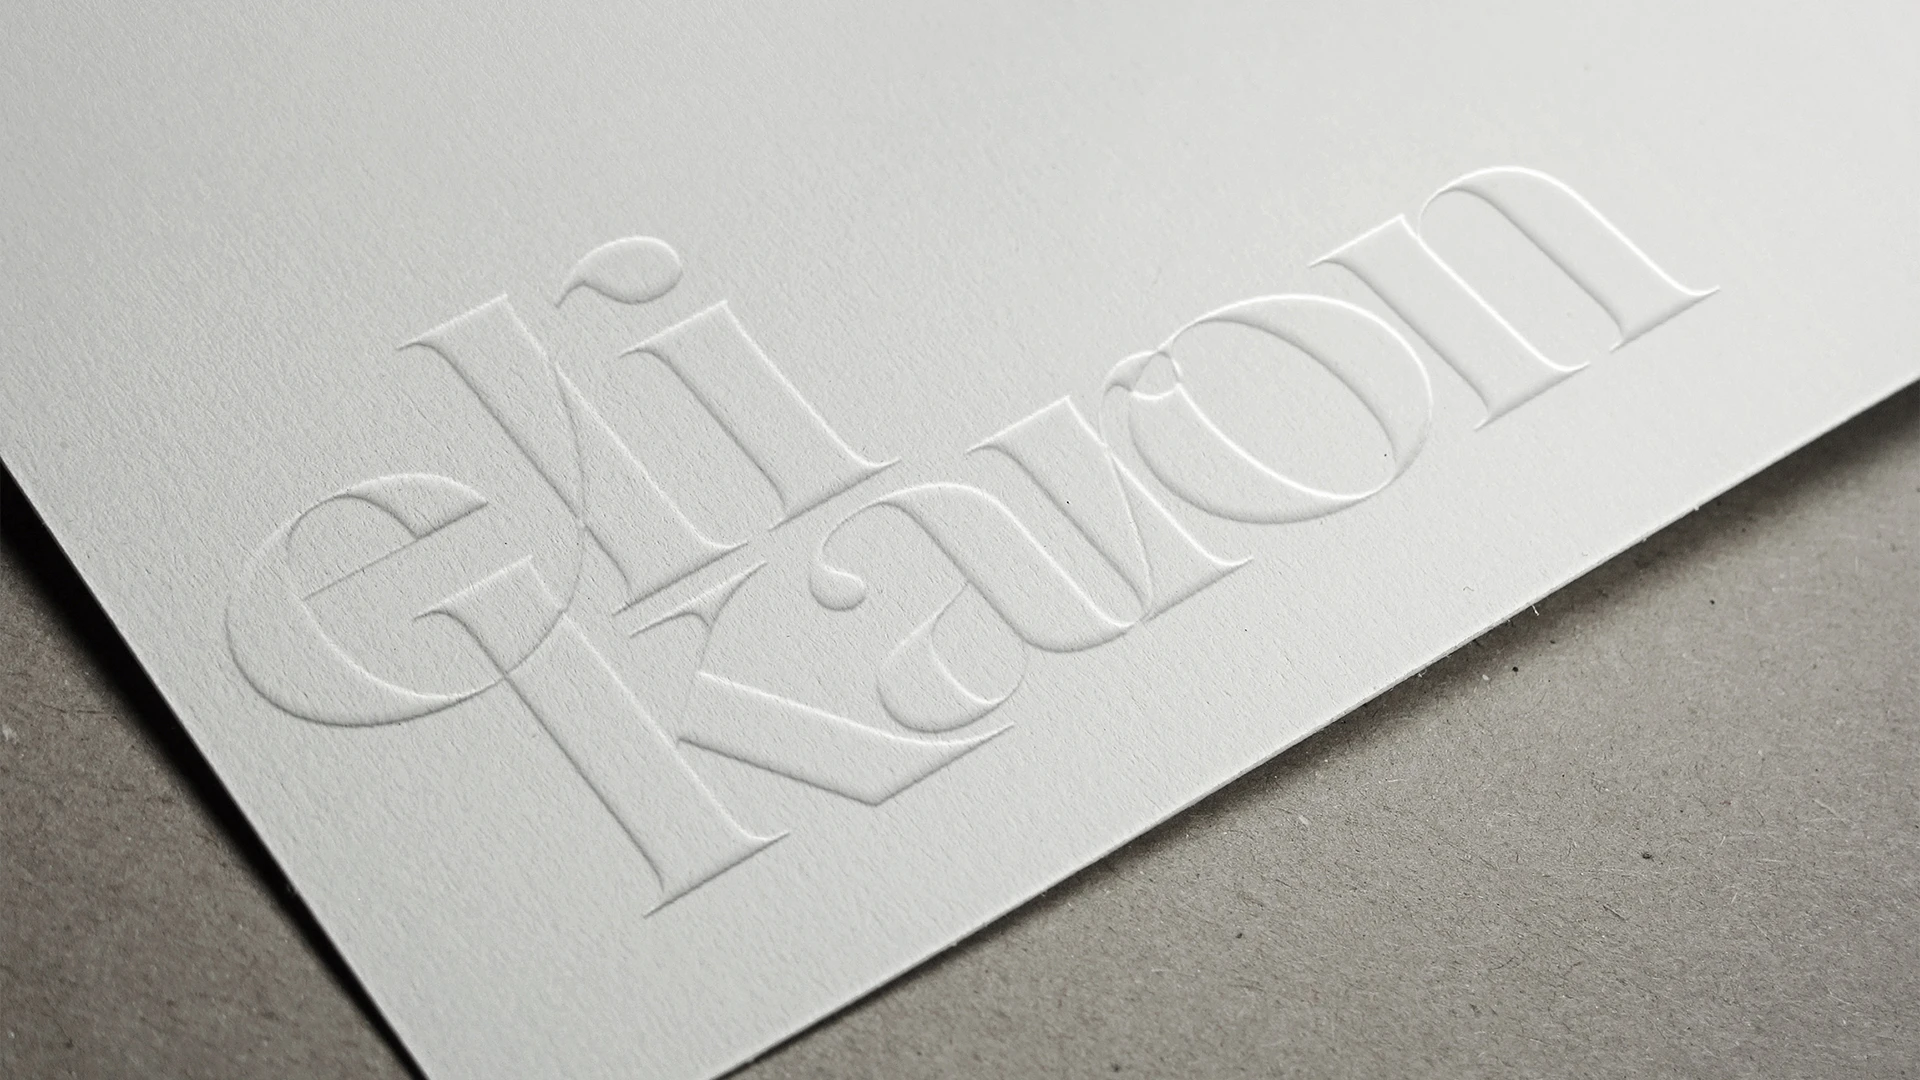 Embossed Eli Karon logo on paper.